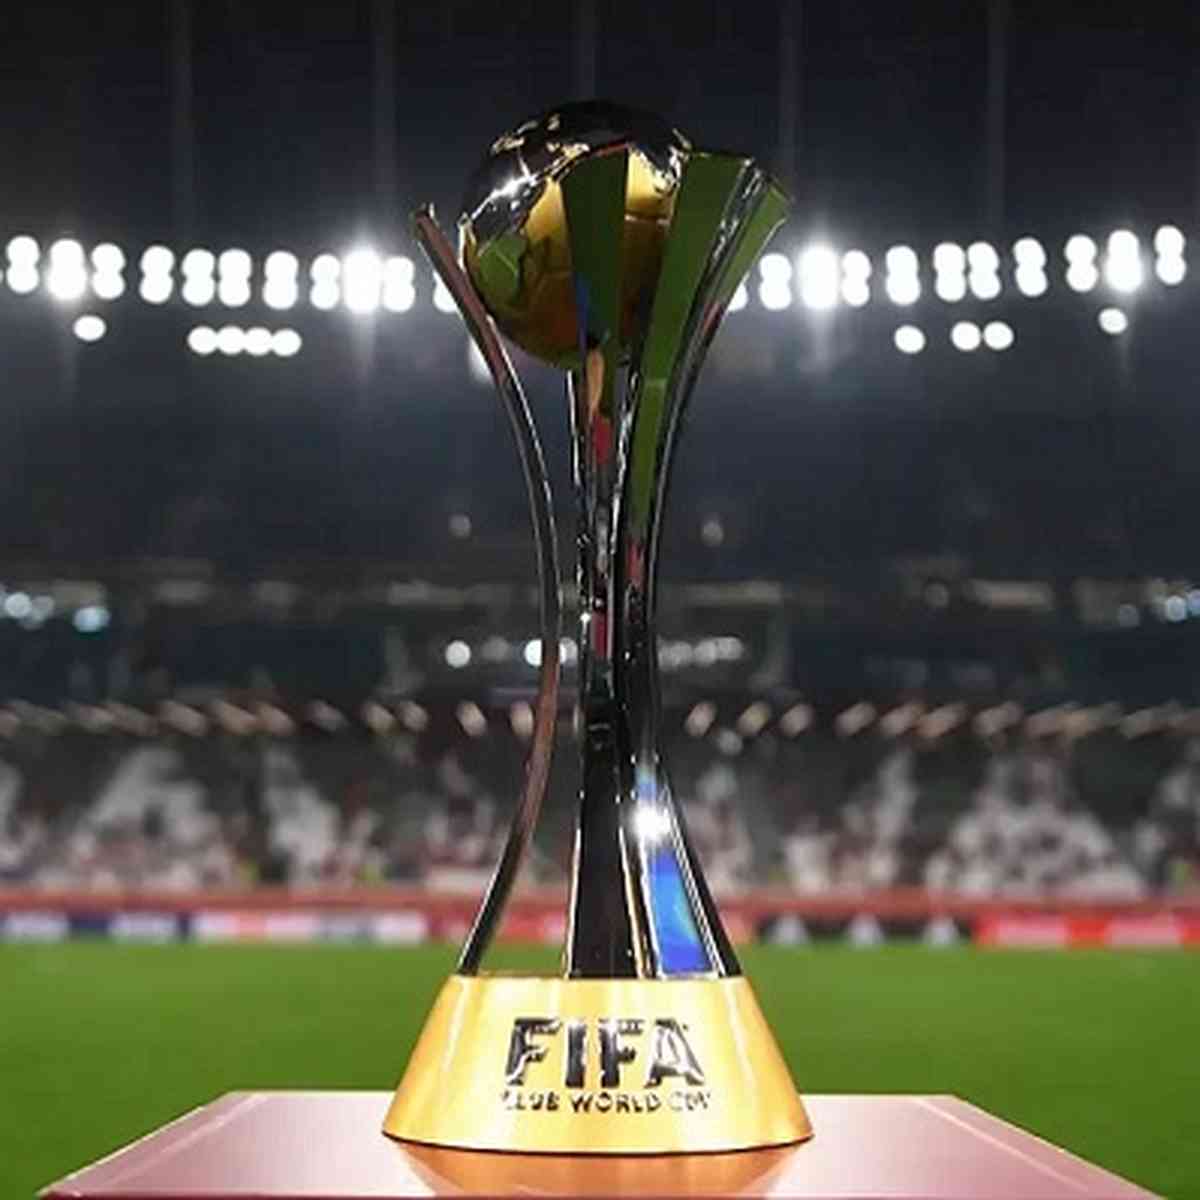 Fifa anuncia datas do Mundial de Clubes de 2019 - Gazeta Esportiva